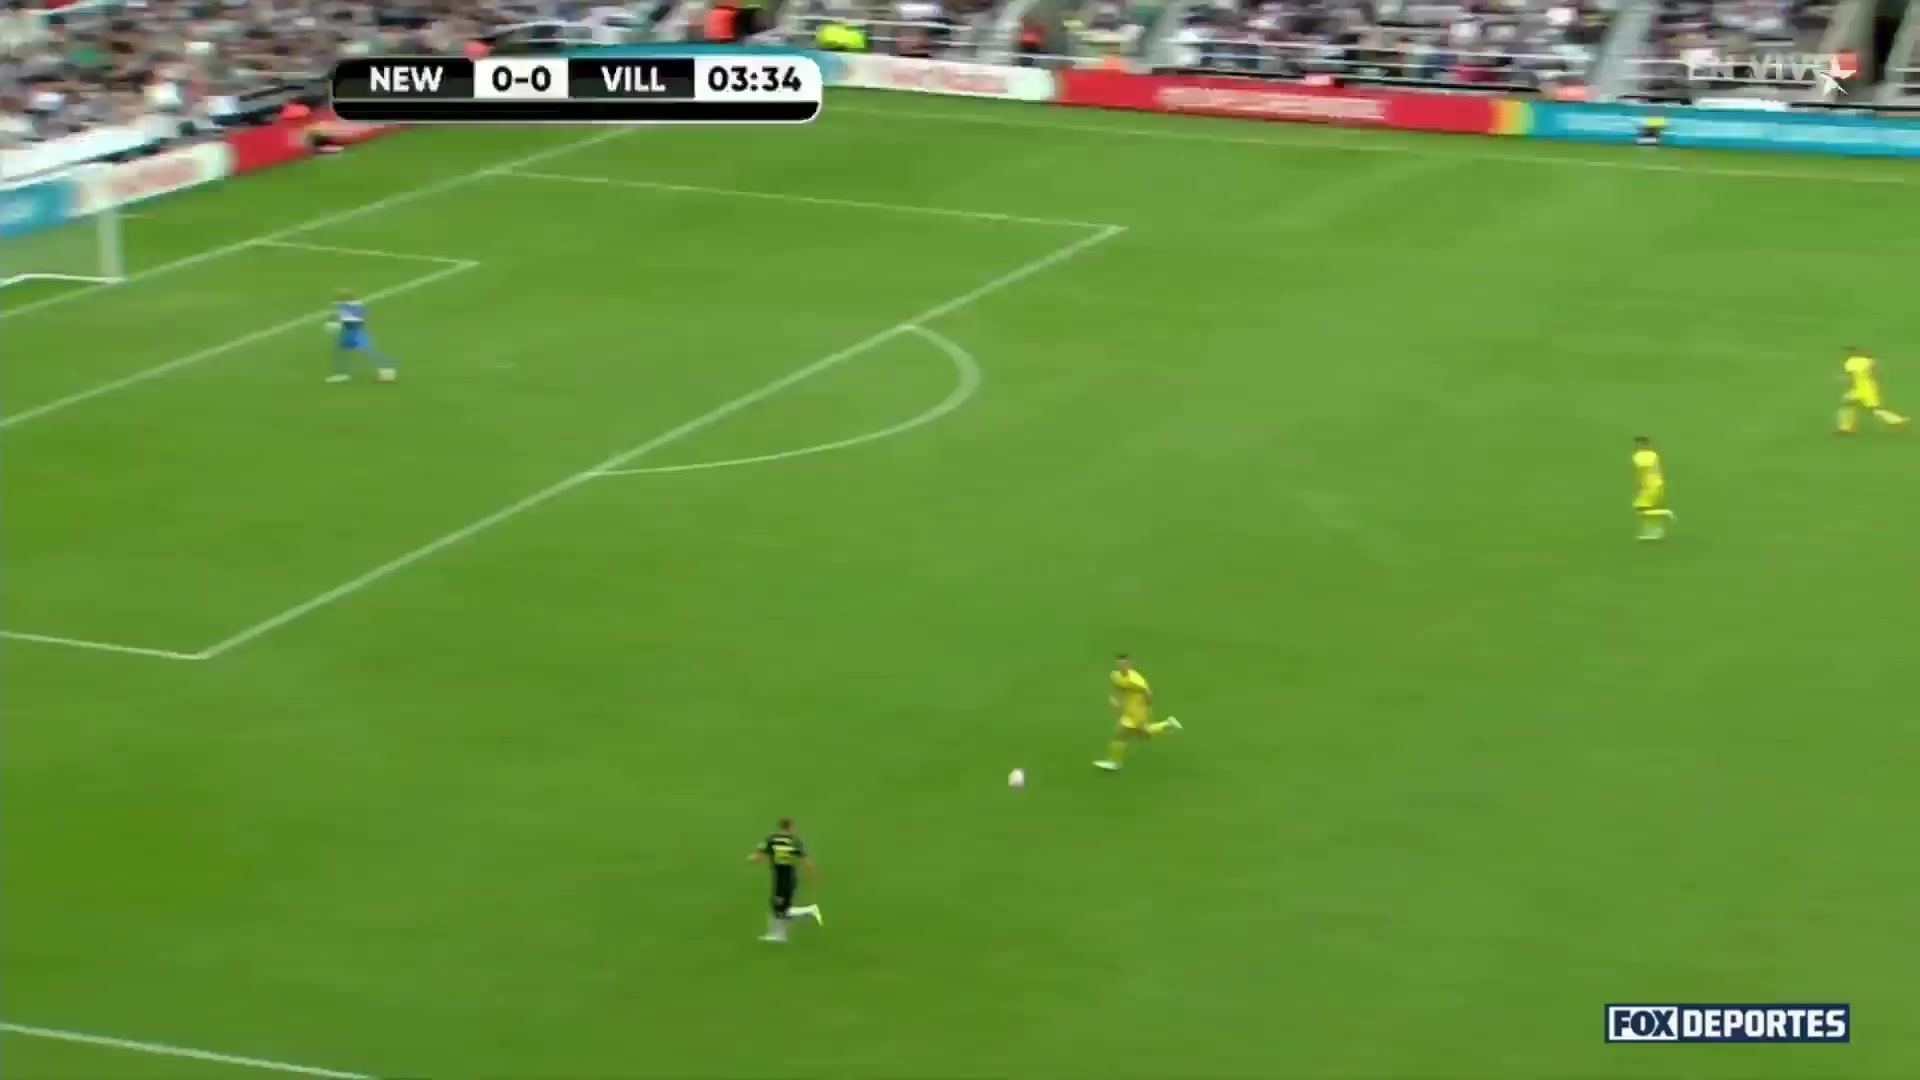 INT CF Newcastle United Vs Villarreal  Goal in 4 min, Score 1:0